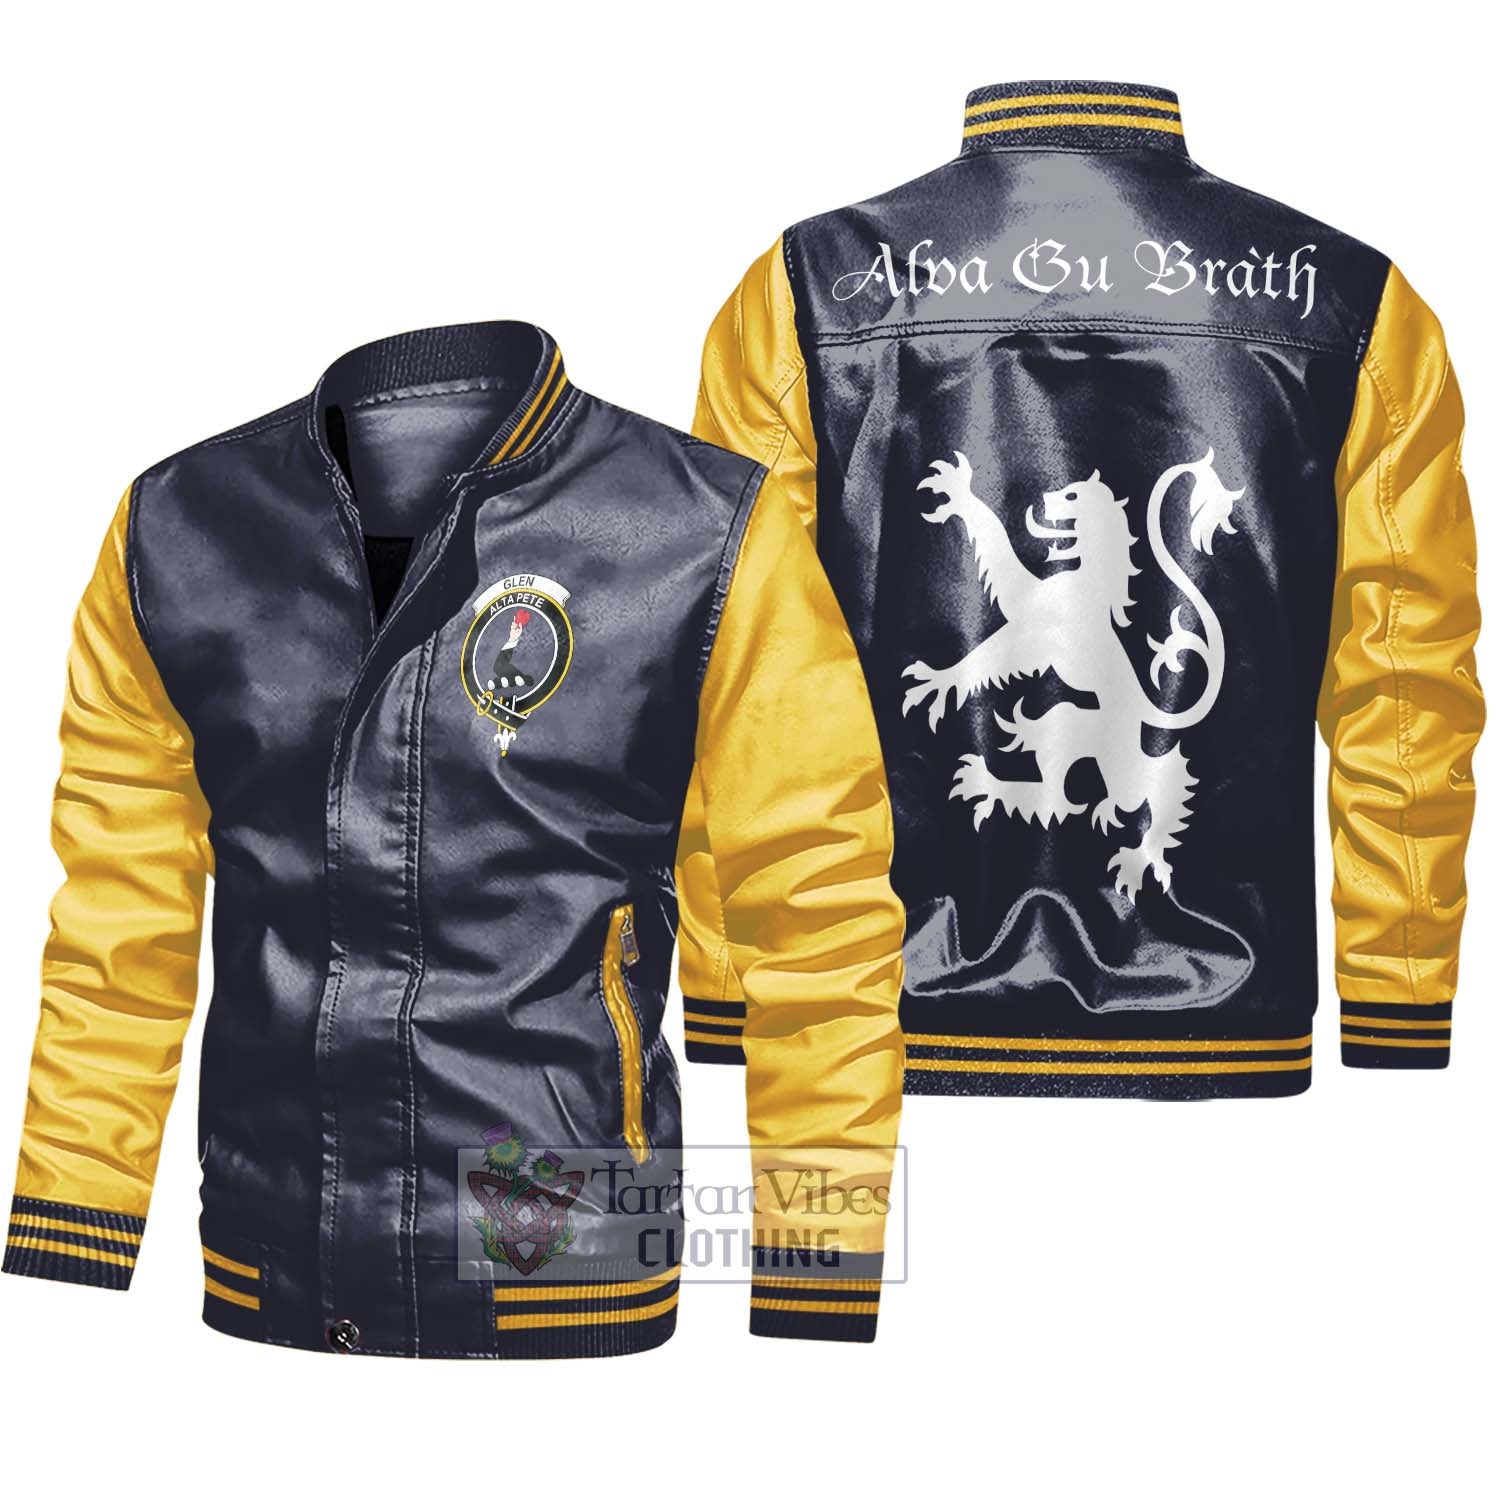 Tartan Vibes Clothing Glen Family Crest Leather Bomber Jacket Lion Rampant Alba Gu Brath Style